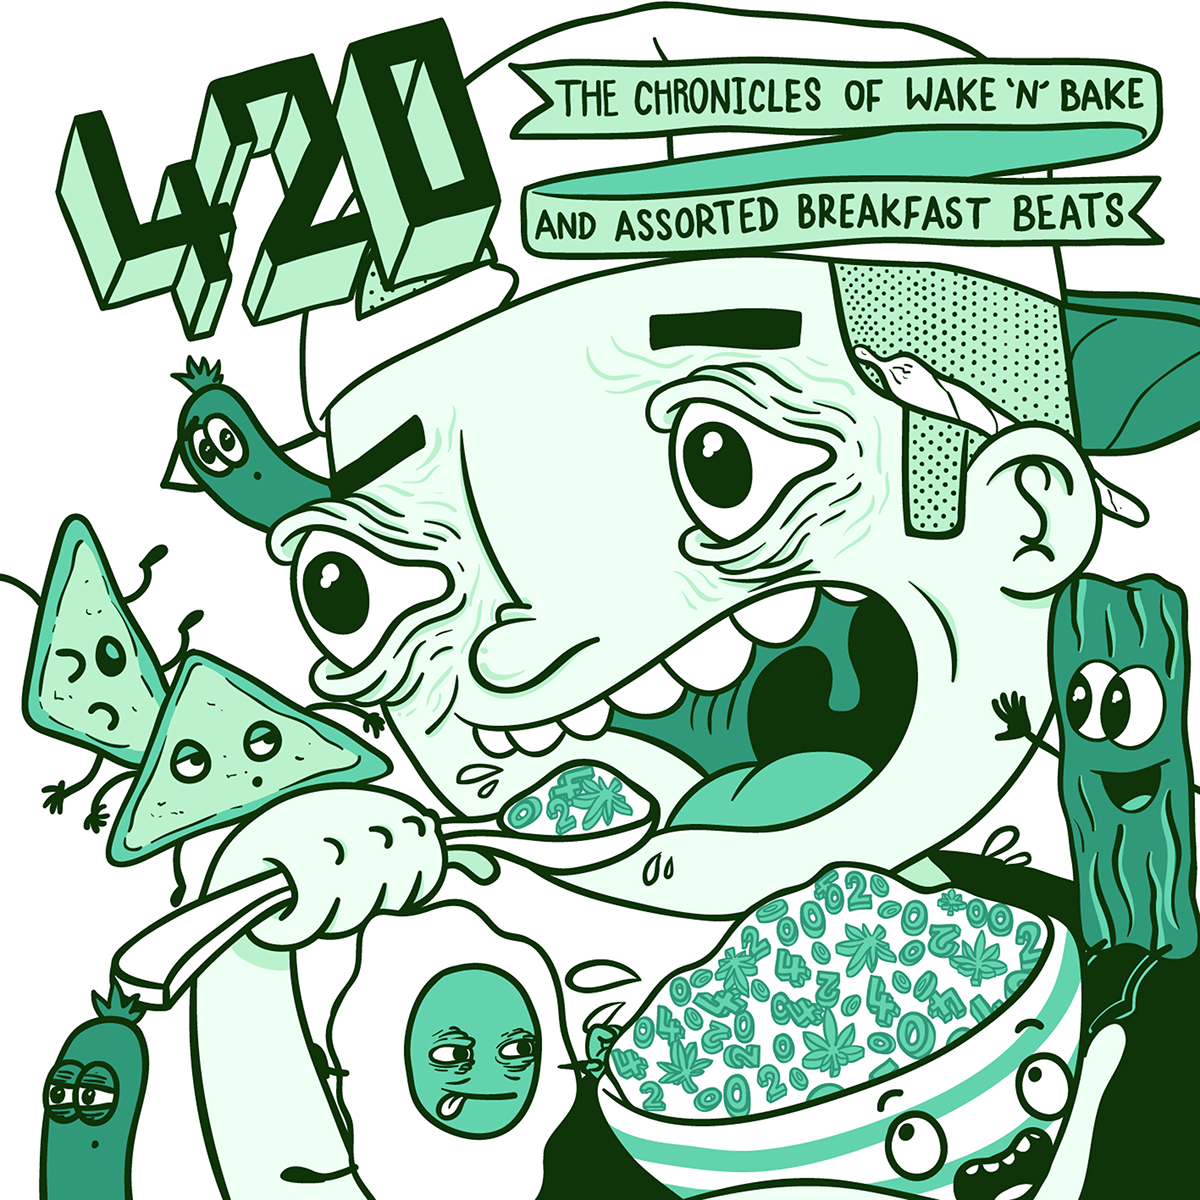 Album artwork for 420's follow up album, "The Chronicles of Wake ...